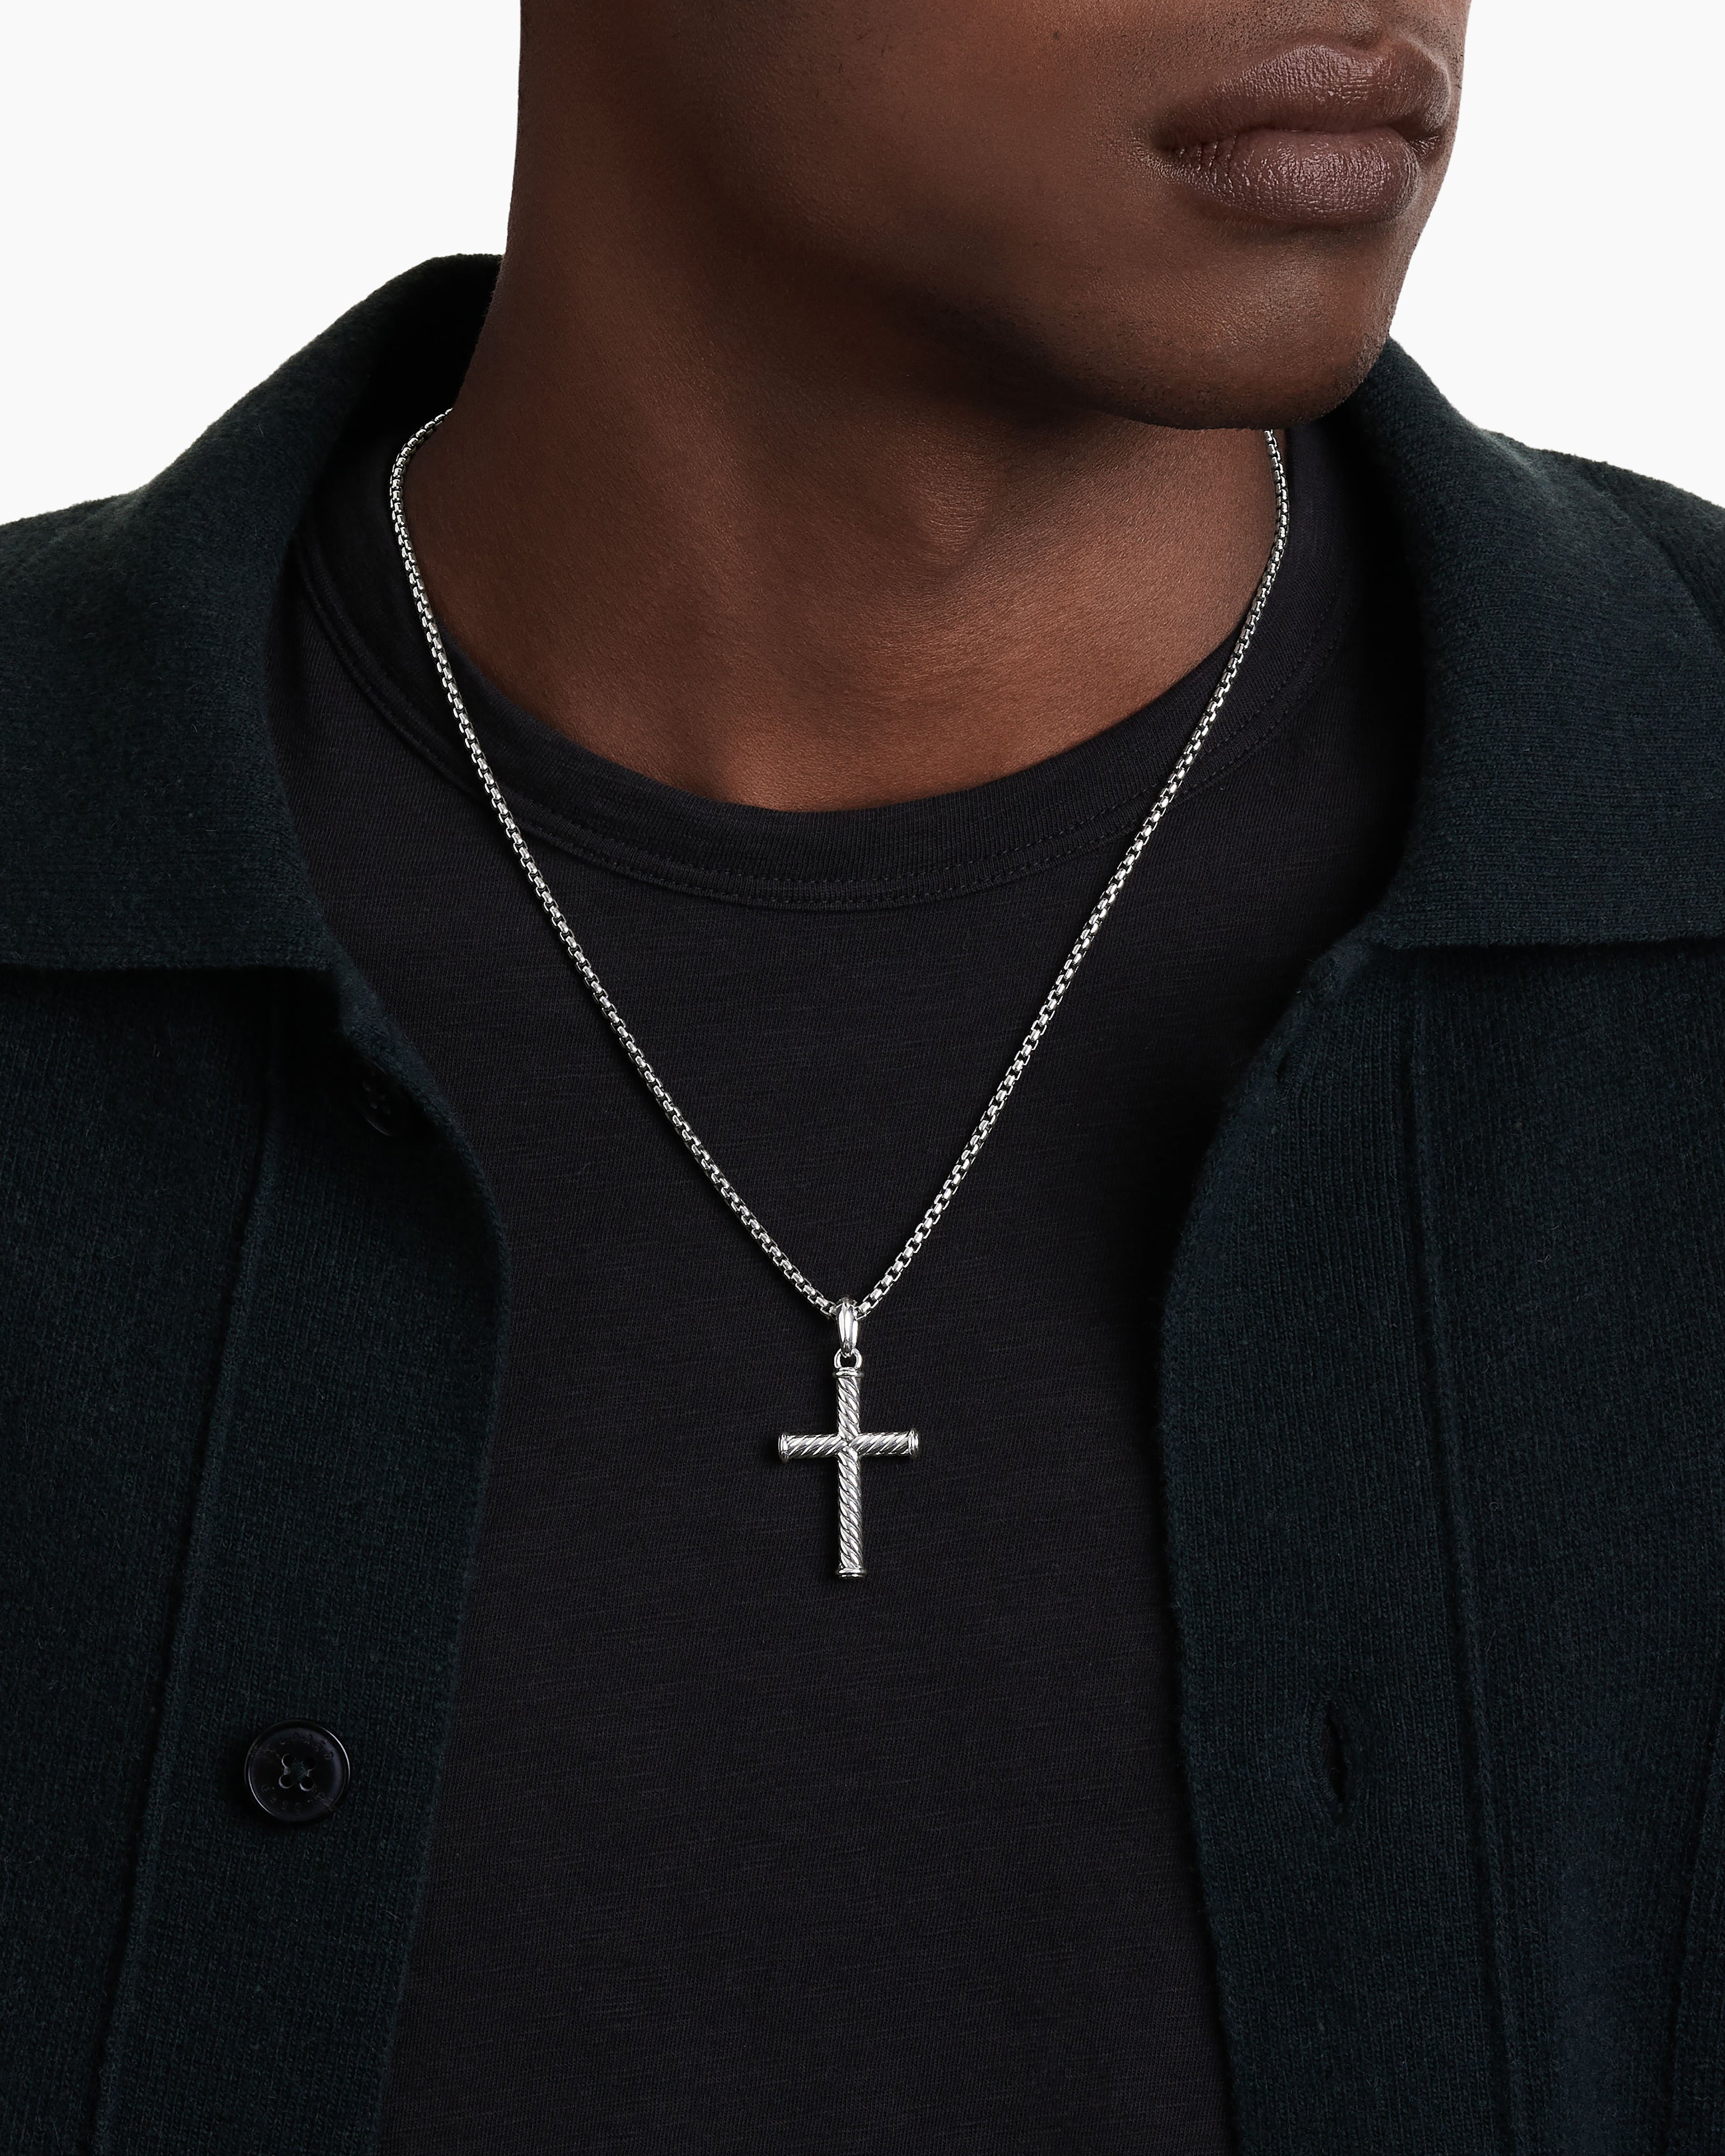 Men's Cross Necklaces | Kohl's